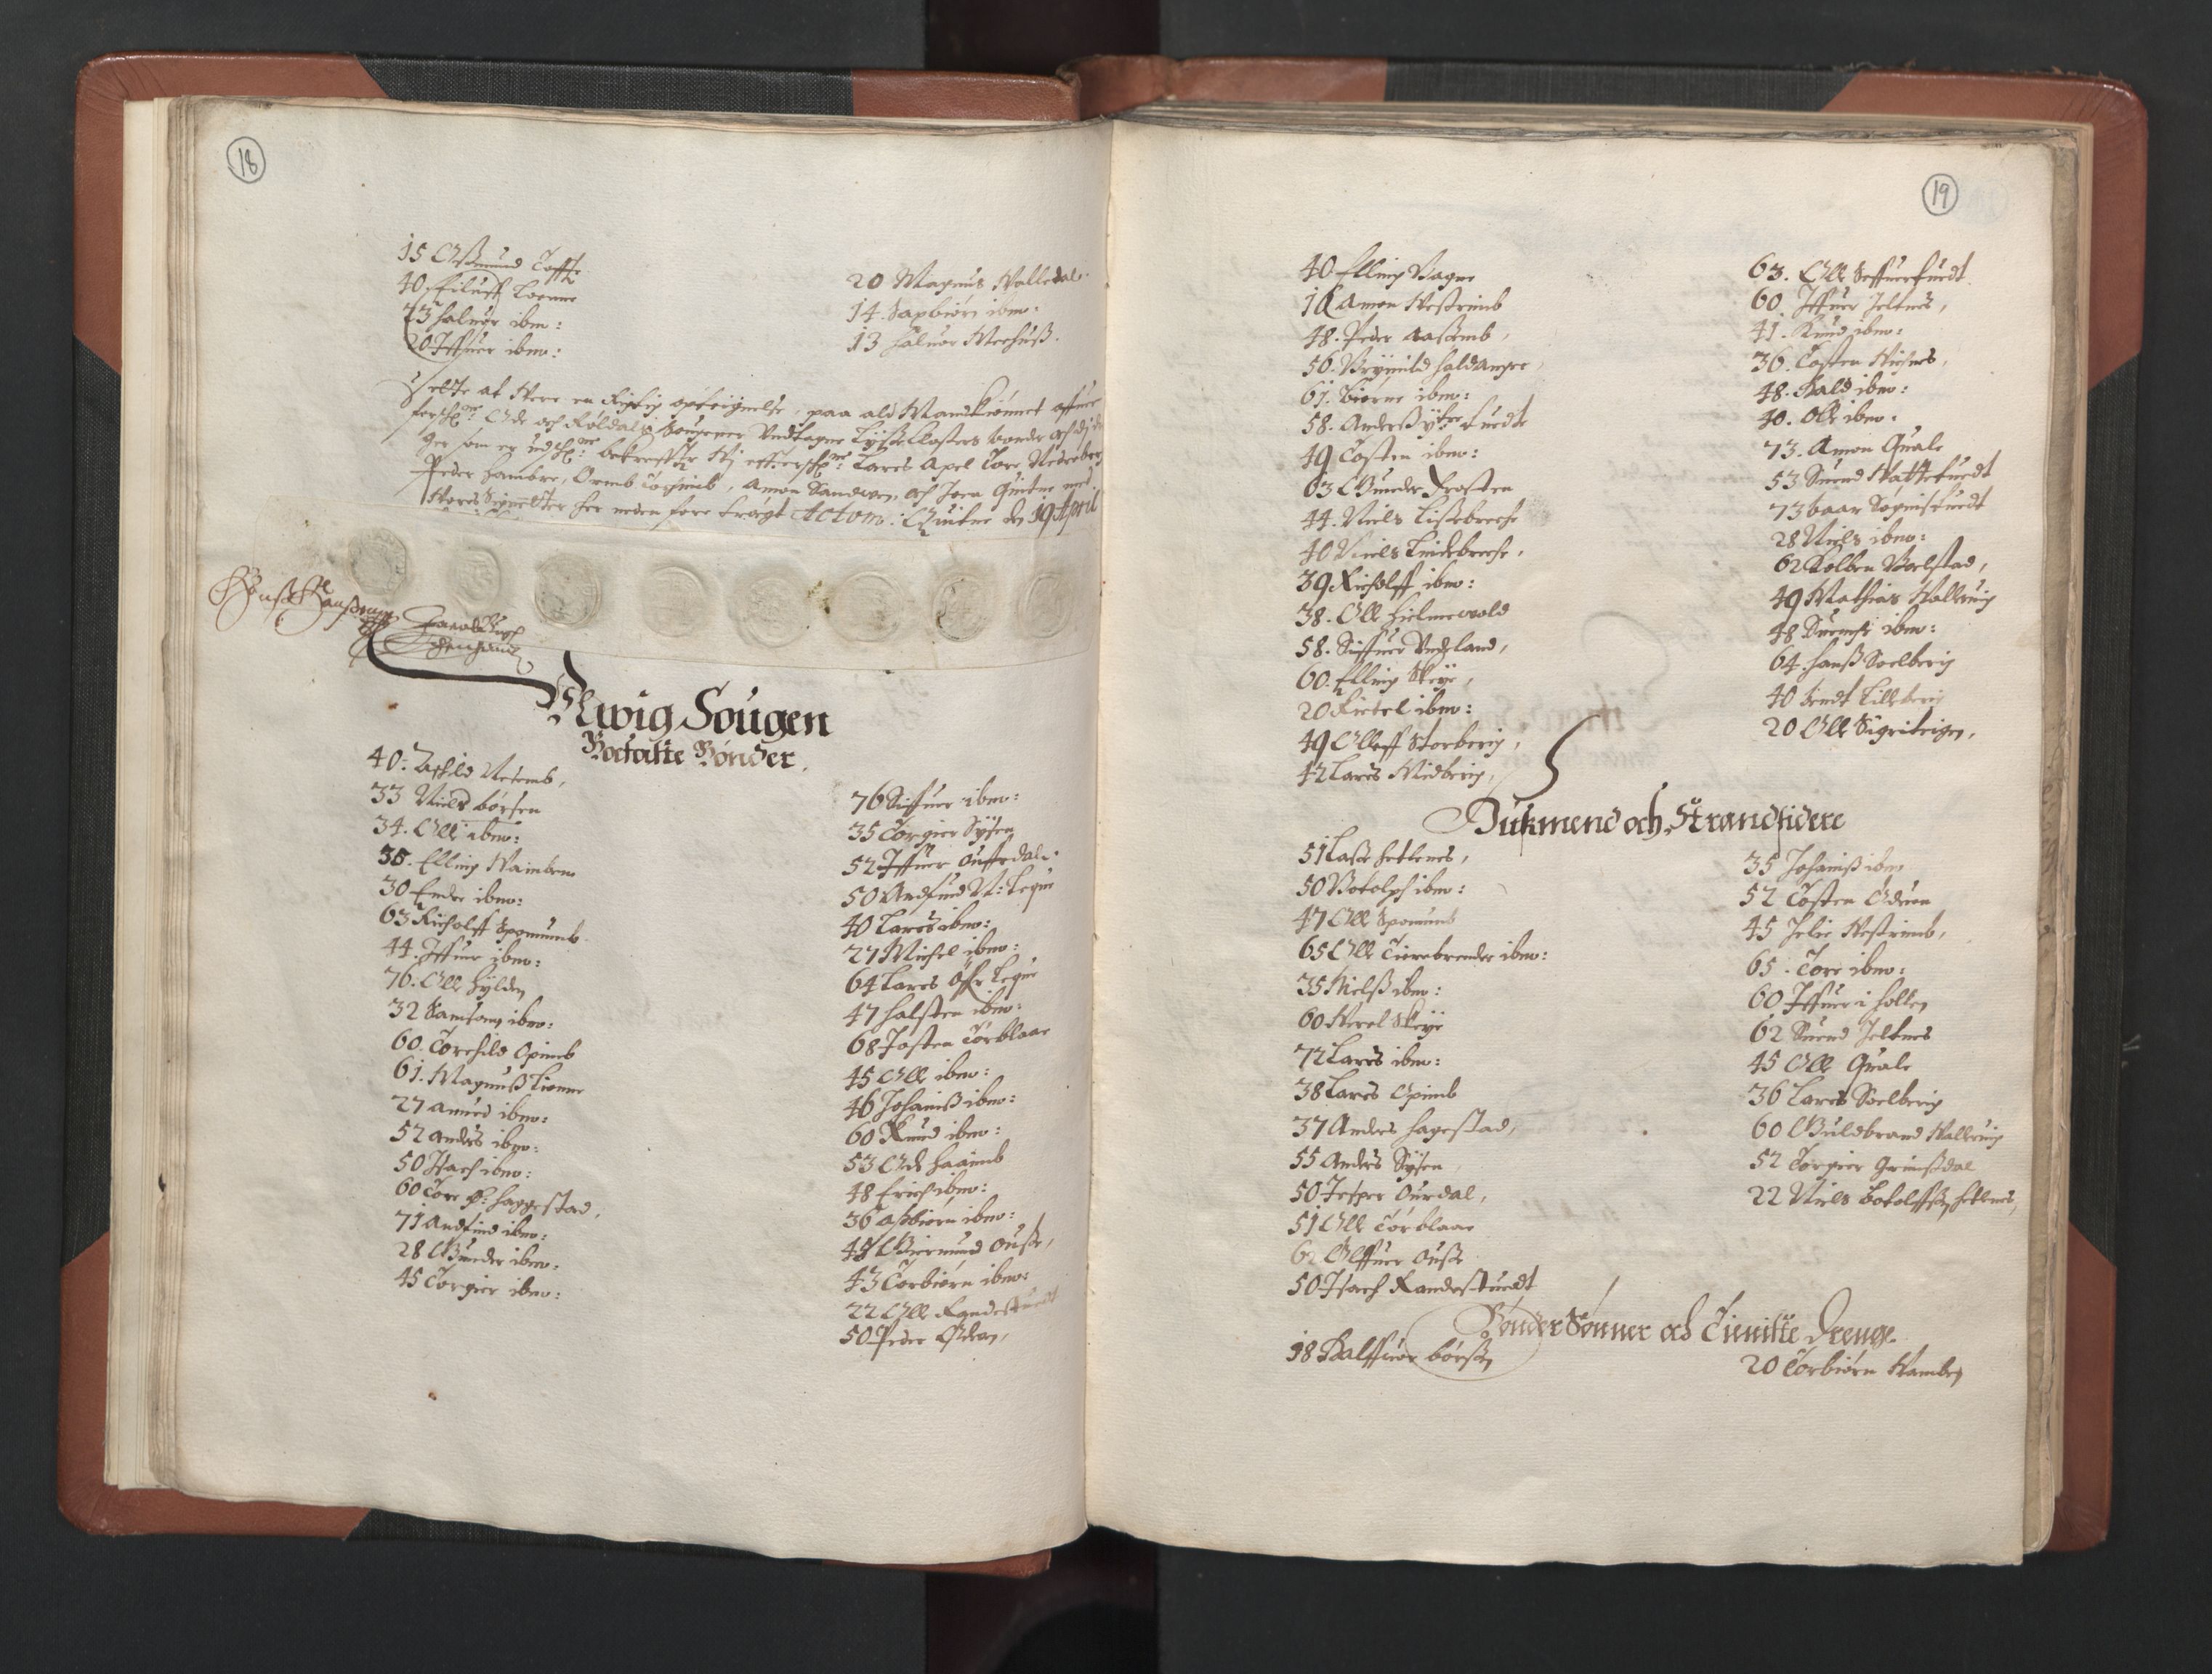 RA, Fogdenes og sorenskrivernes manntall 1664-1666, nr. 14: Hardanger len, Ytre Sogn fogderi og Indre Sogn fogderi, 1664-1665, s. 18-19